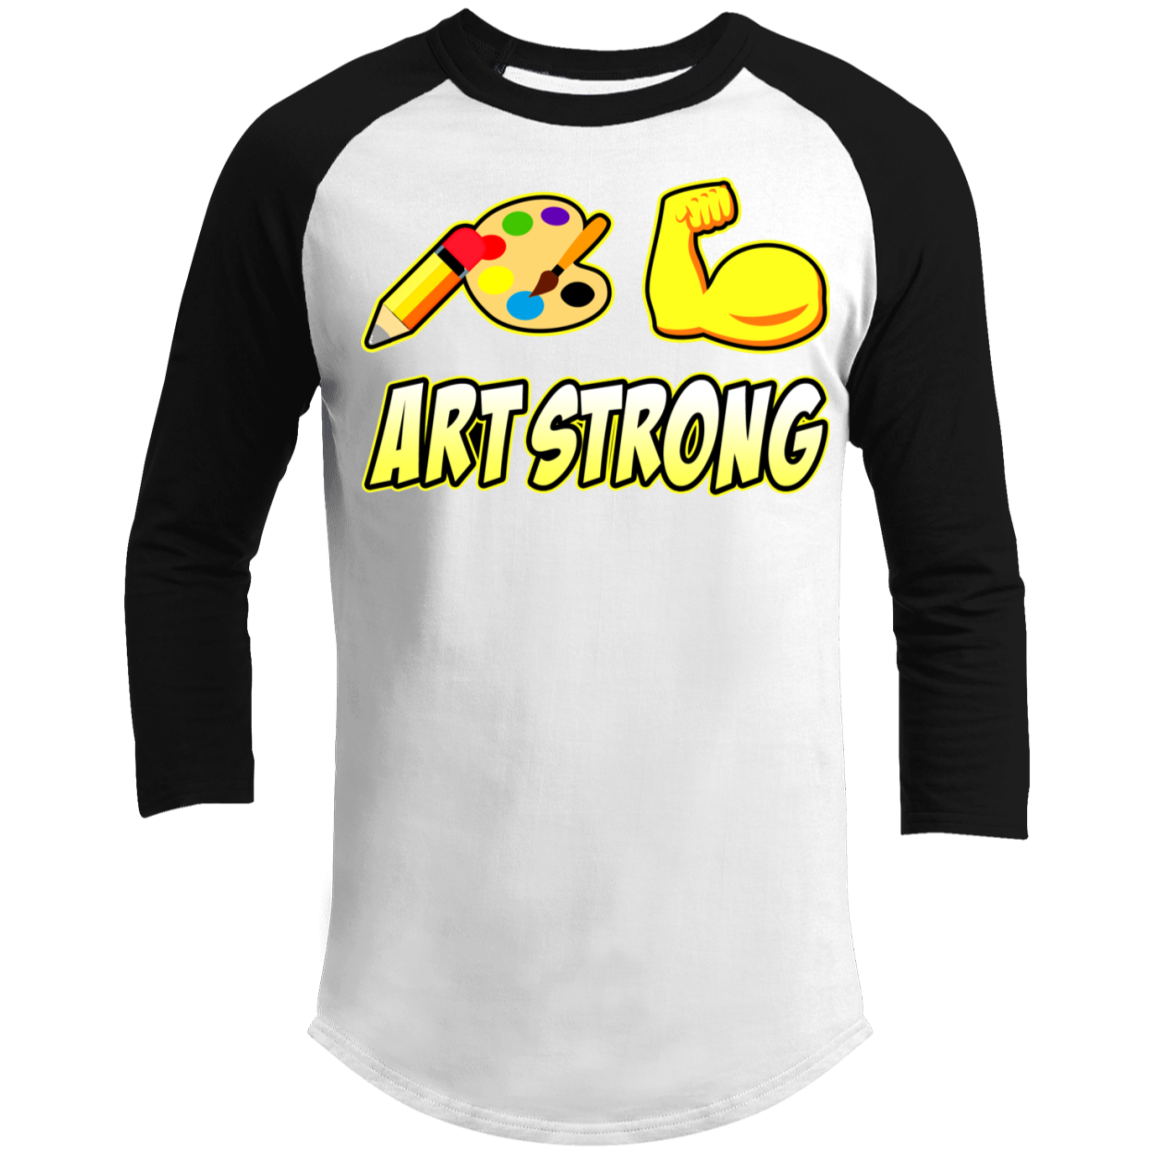 ArtichokeUSA Custom Design. Art Strong. Men's 3/4 Raglan Sleeve Shirt